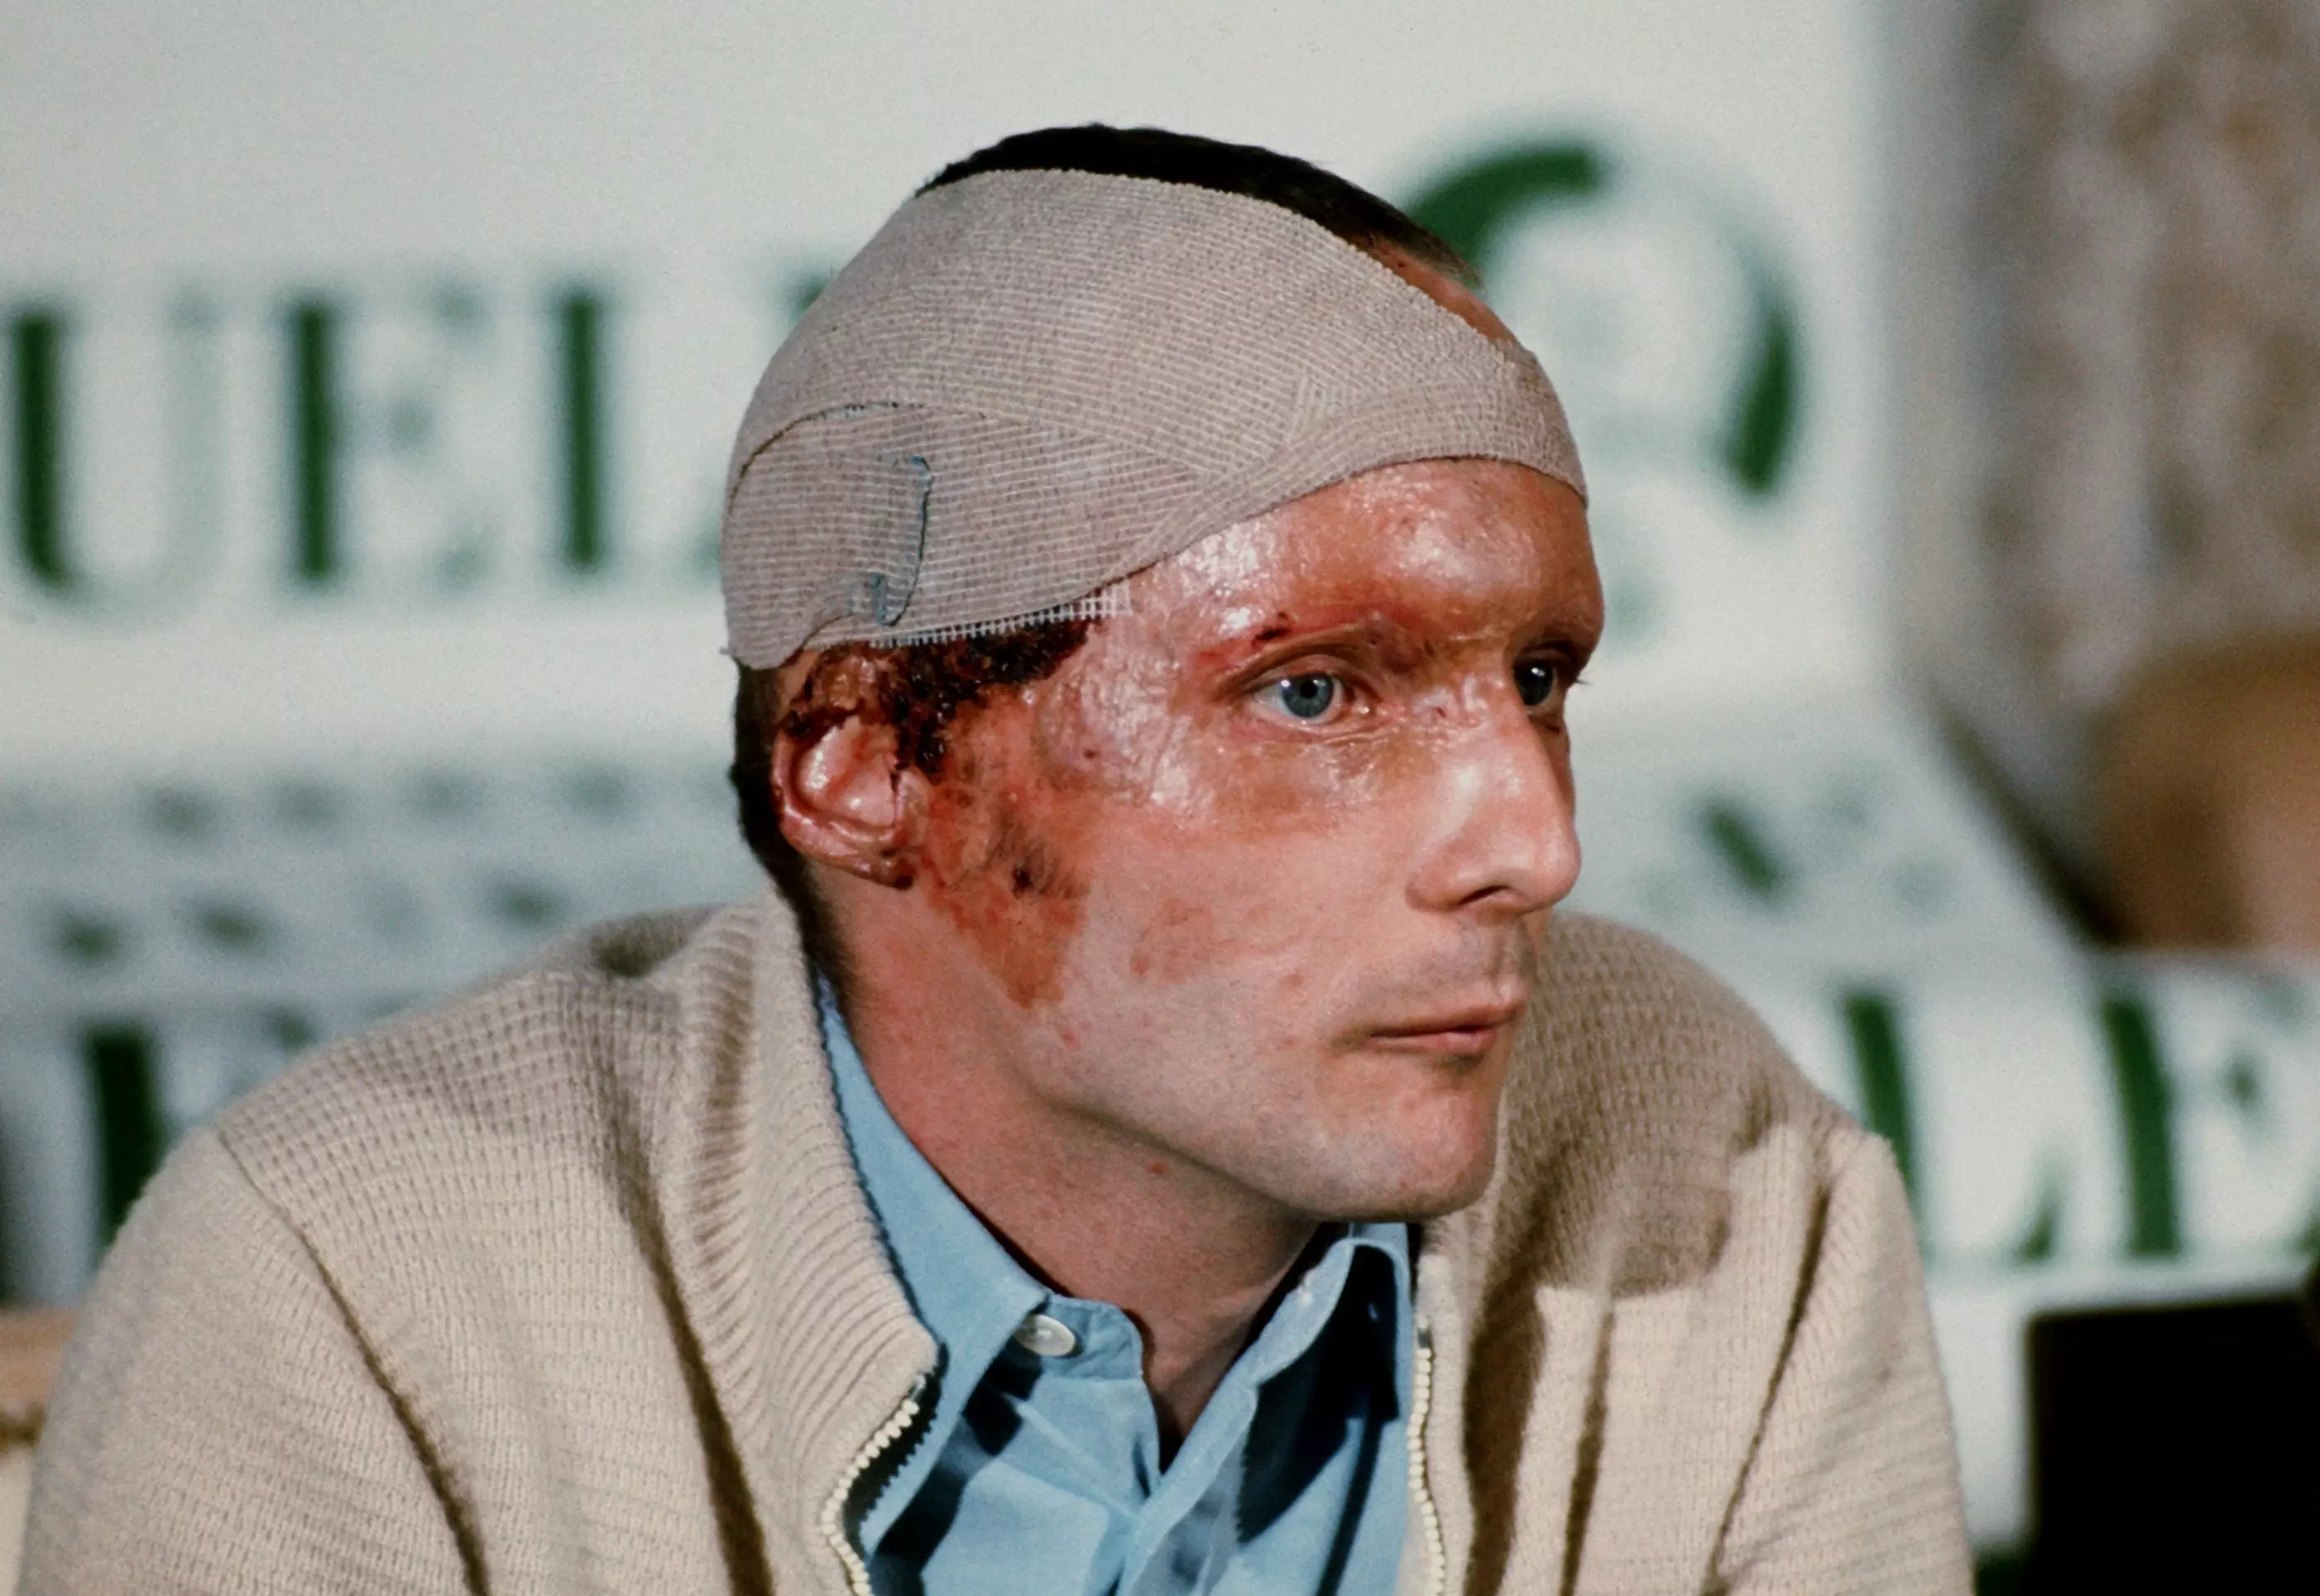 Lauda's severe facial burns following the incident.